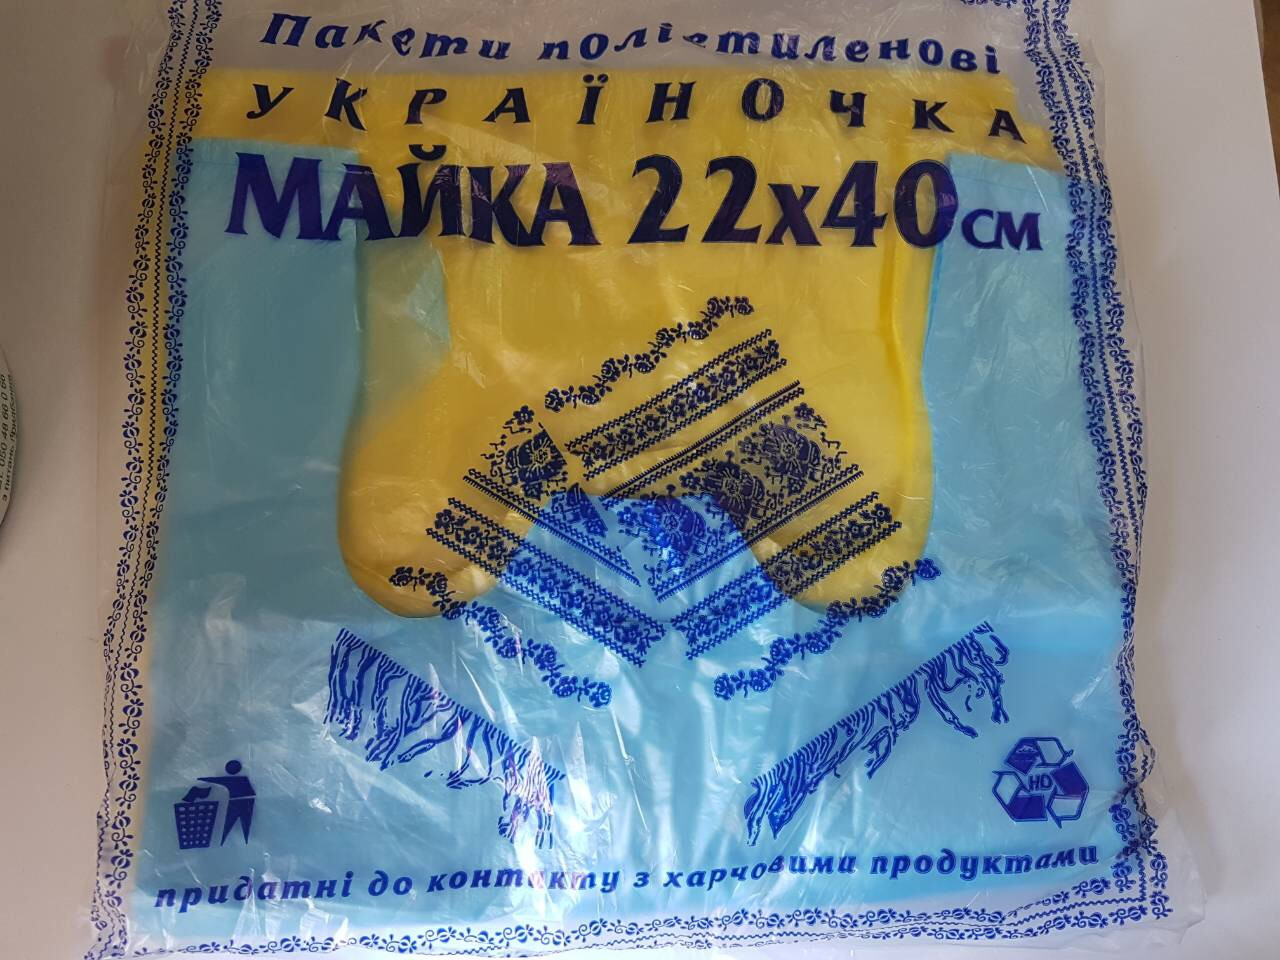 Пакет поліетиленовий майка тип Україночка 220*400 мм, 100 штук у пакованні